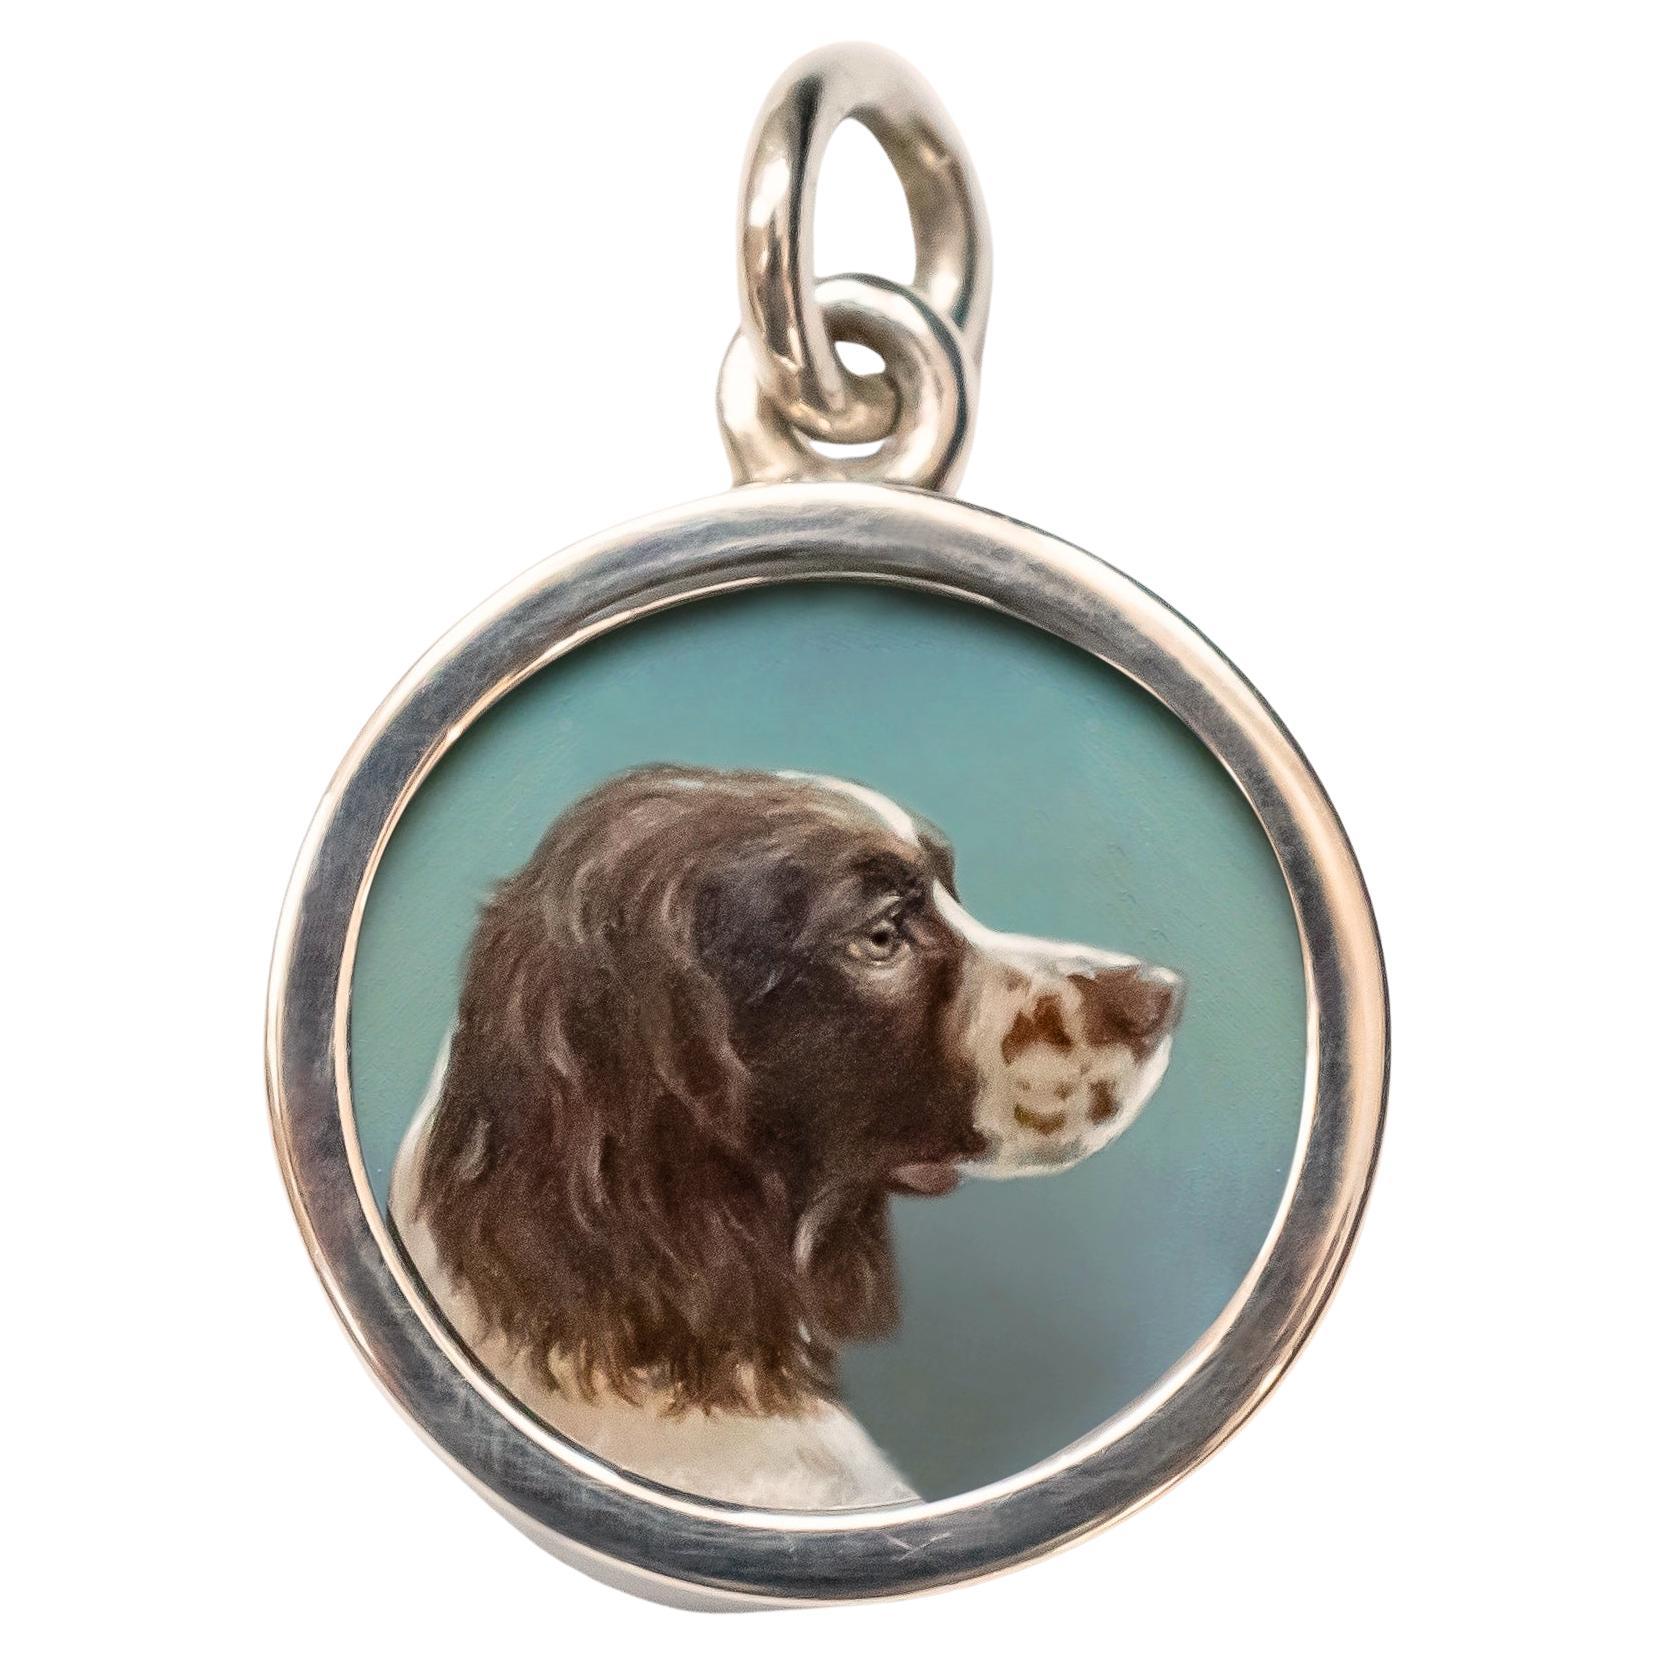 Beth De Loiselle Miniature Spaniel Dog Oil in Paul Eaton Bespoke Charm/Pendant